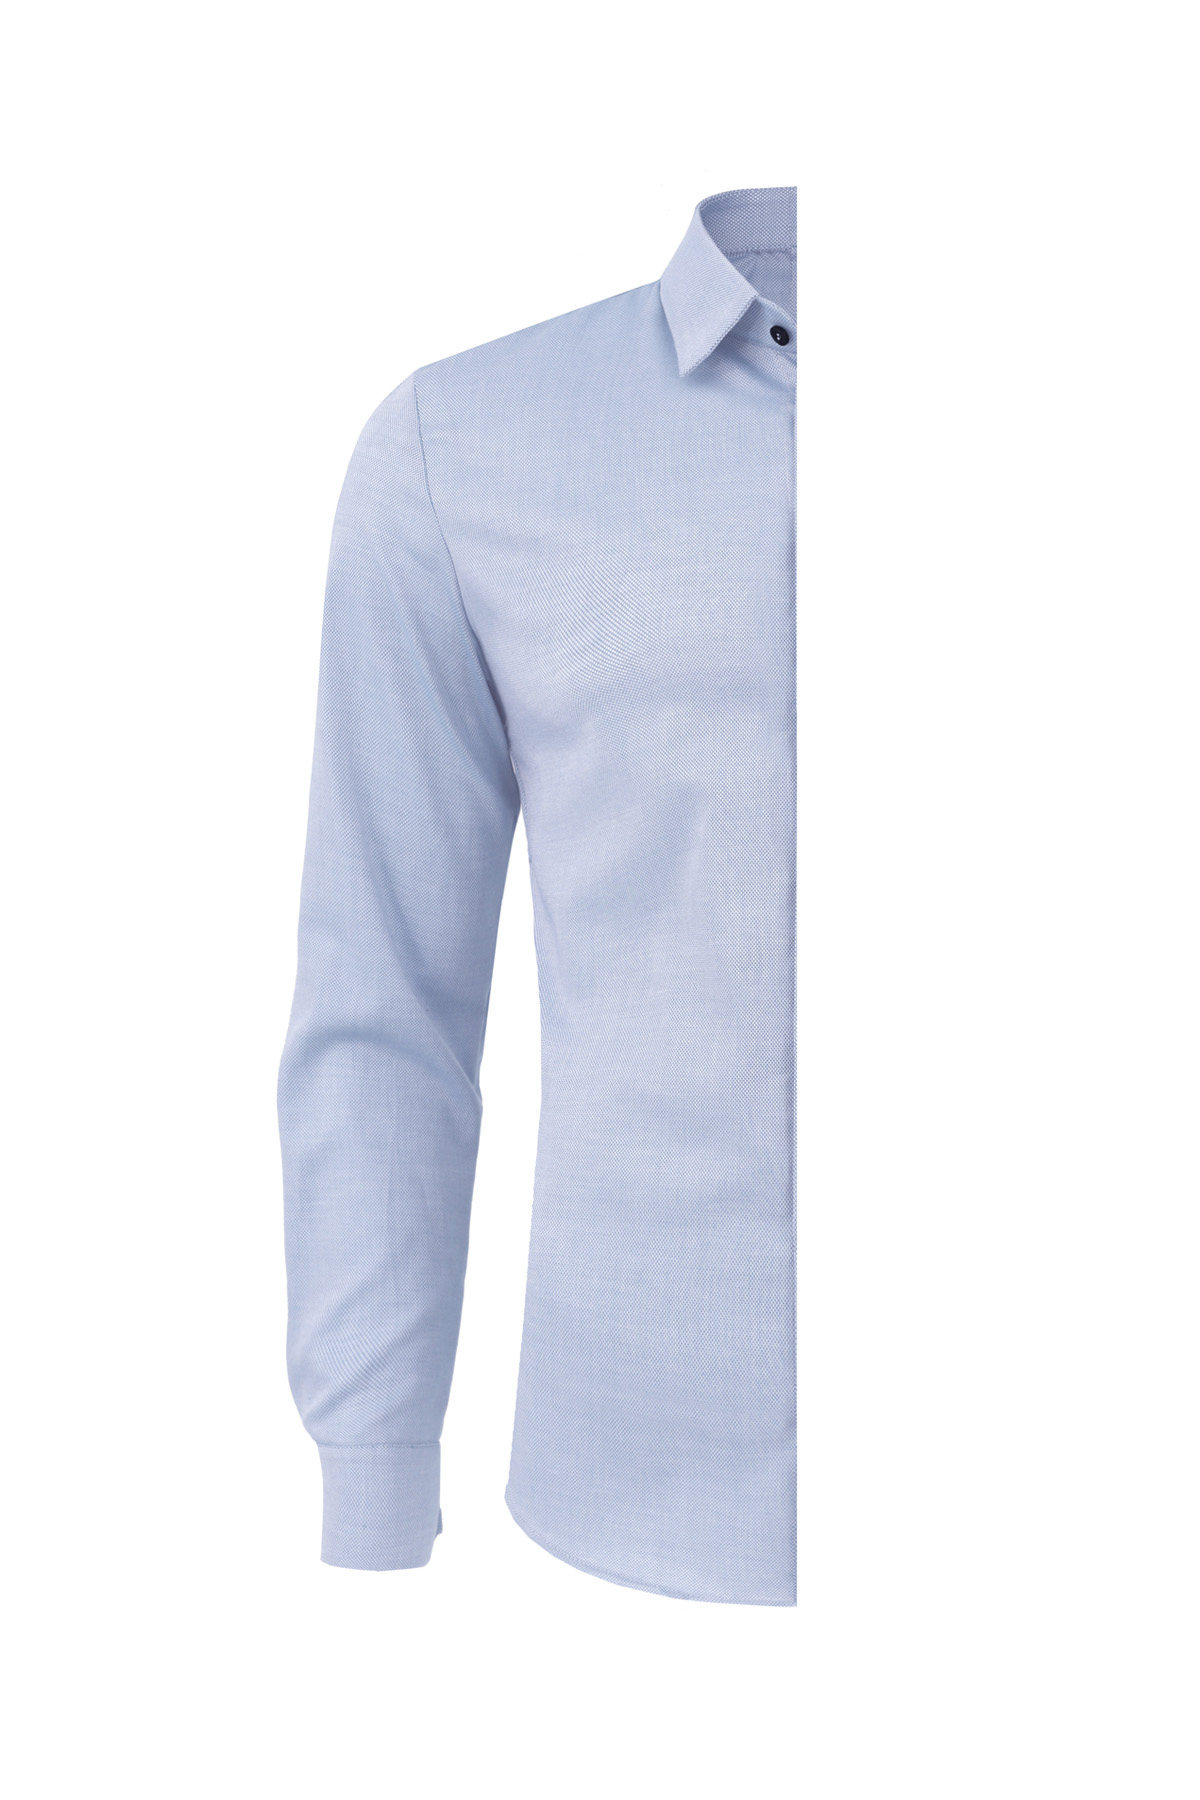 blue slim fit shirt – right